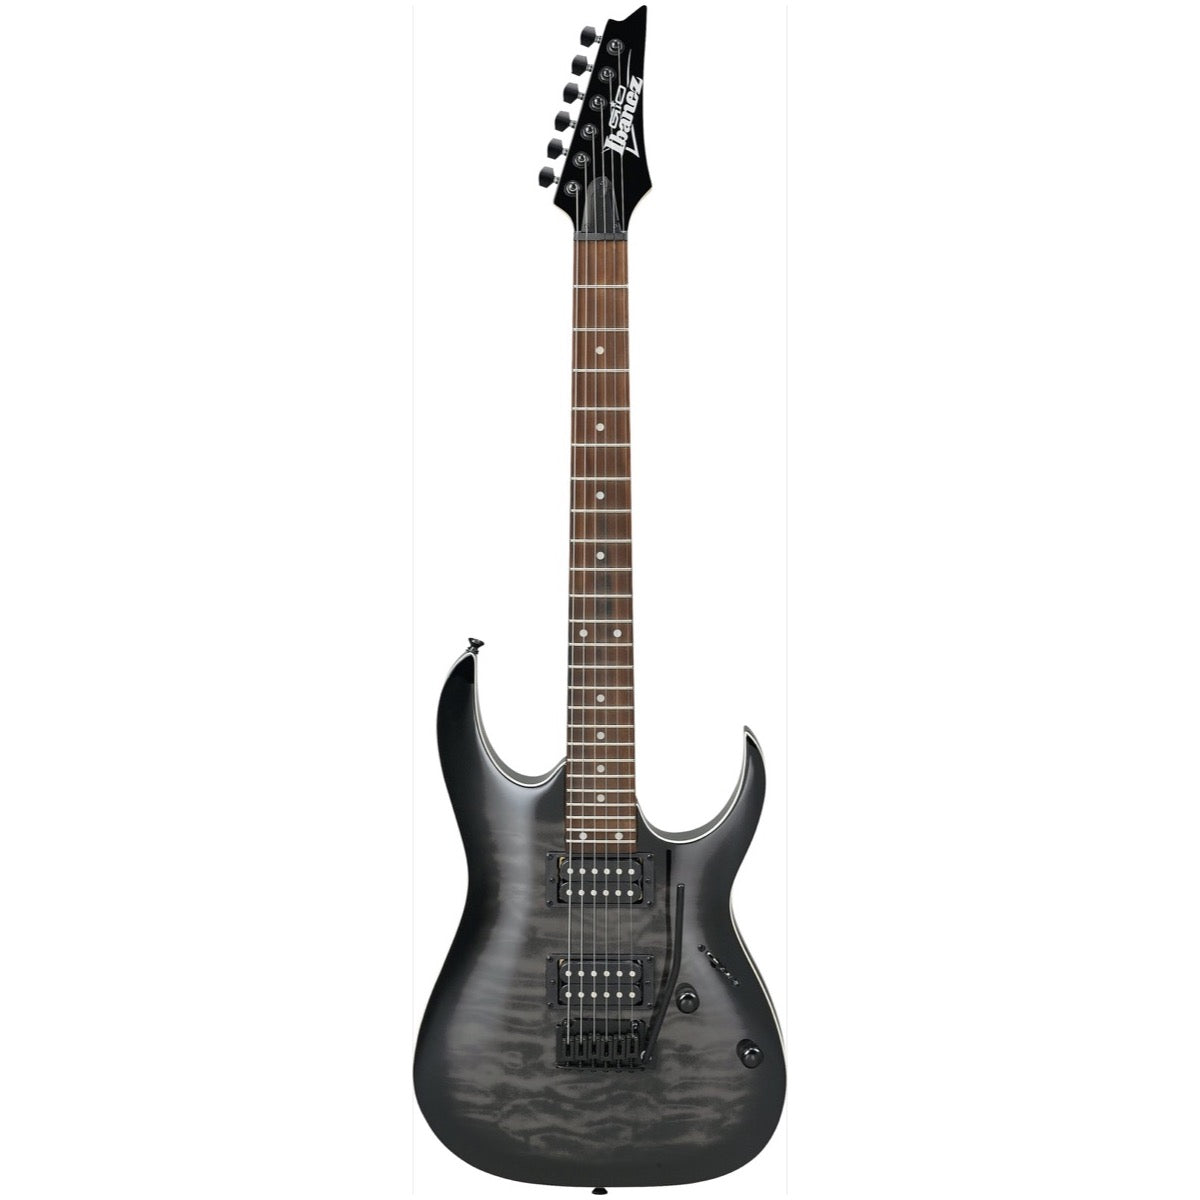 Ibanez GRGA120QA Gio Electric Guitar, Transparent Black Sunburst